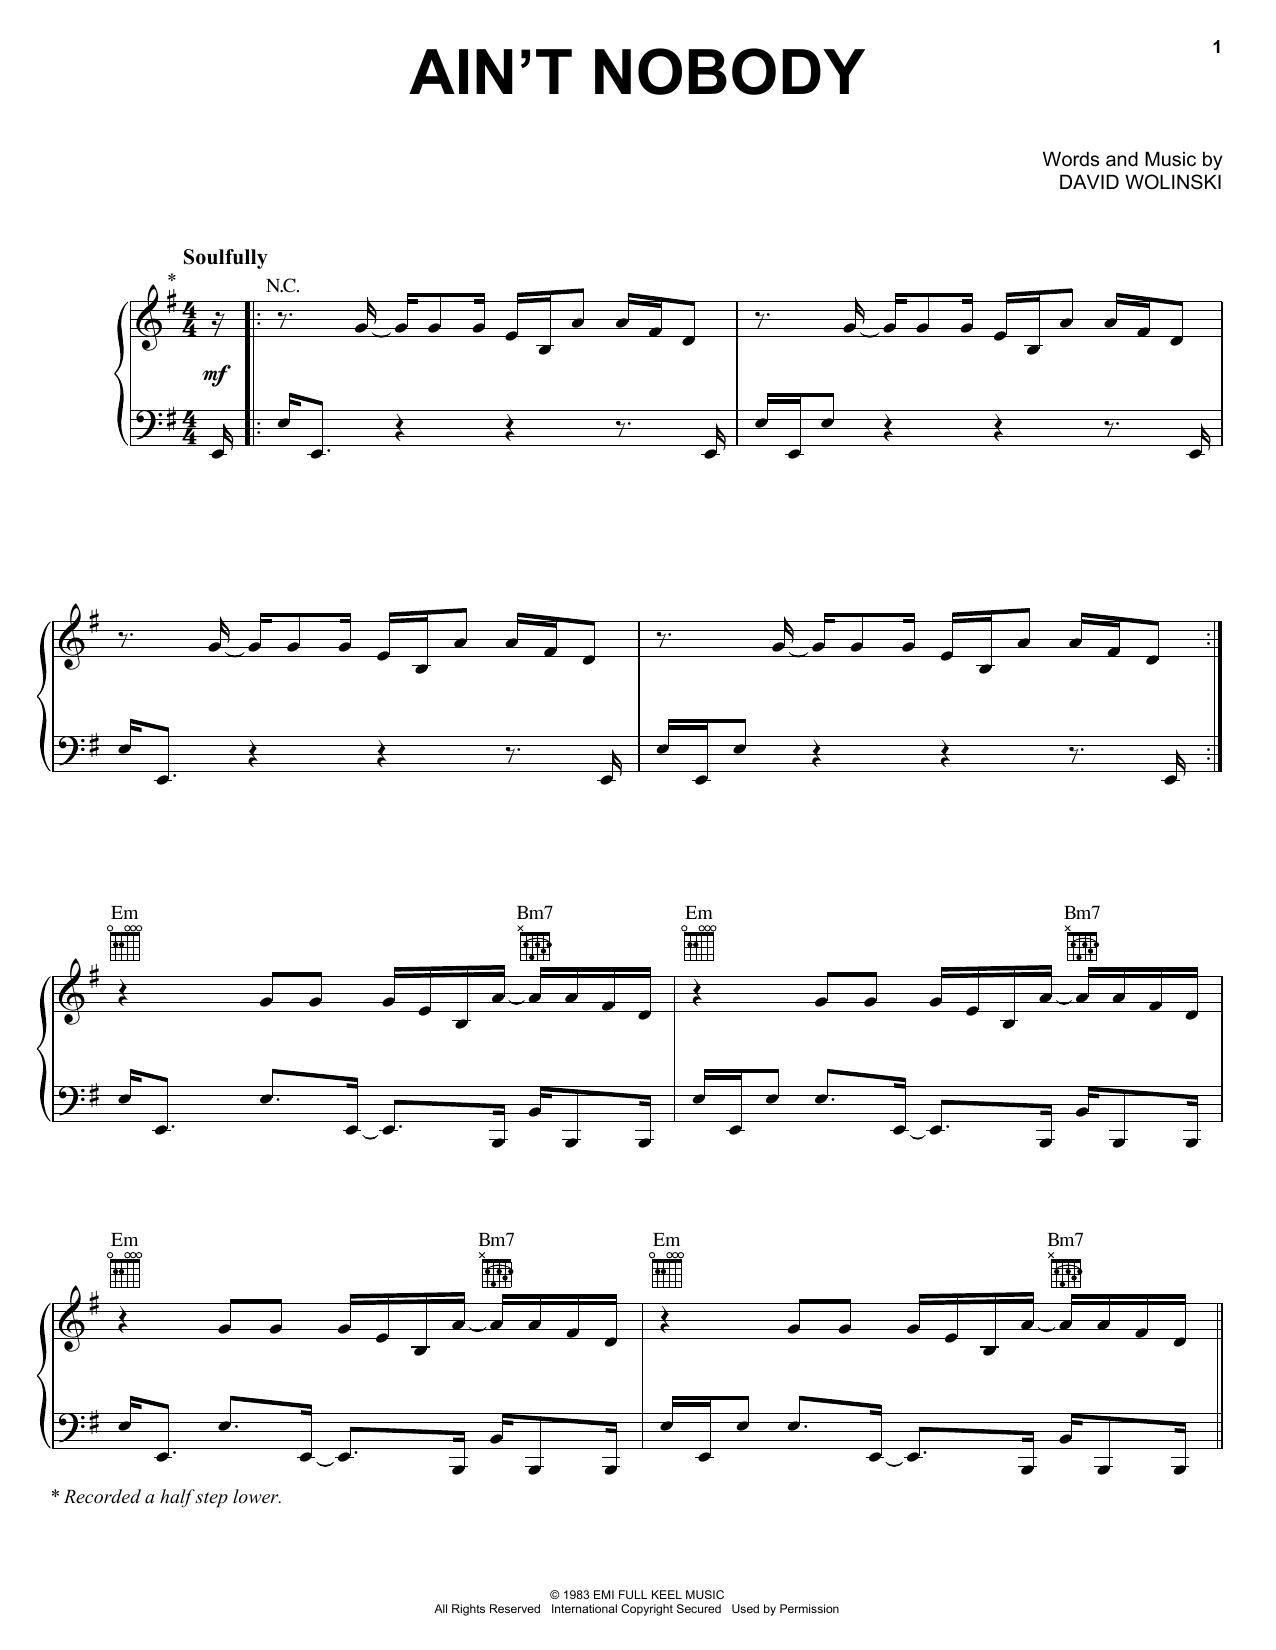 Chaka Khan Ain't Nobody Sheet Music Notes & Chords for Keyboard (abridged) - Download or Print PDF